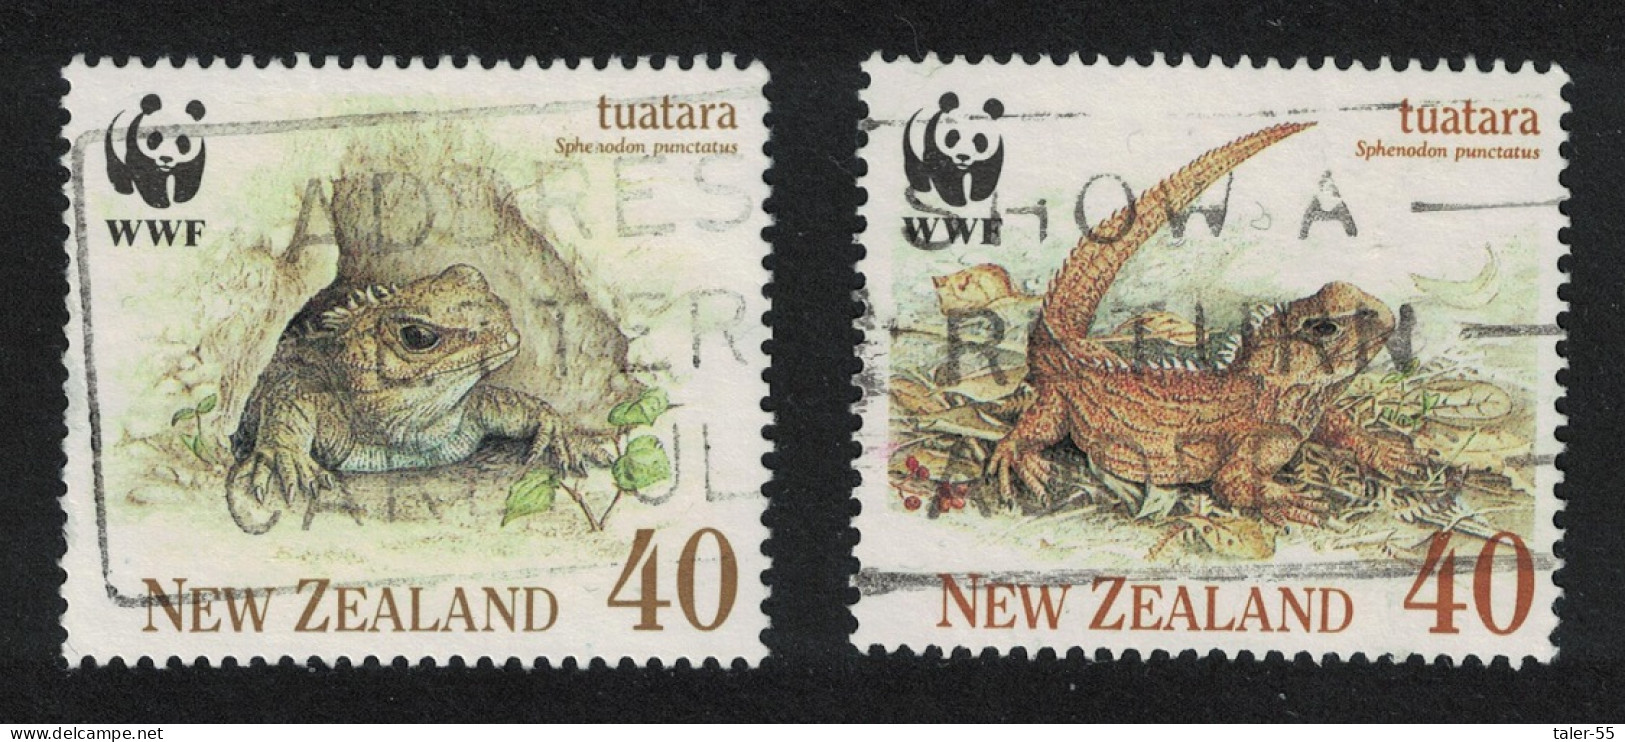 New Zealand WWF Tuatara 2V 1991 Canc SG#1590-1593 MI#1160-1163 Sc#1023-1026 - Gebruikt